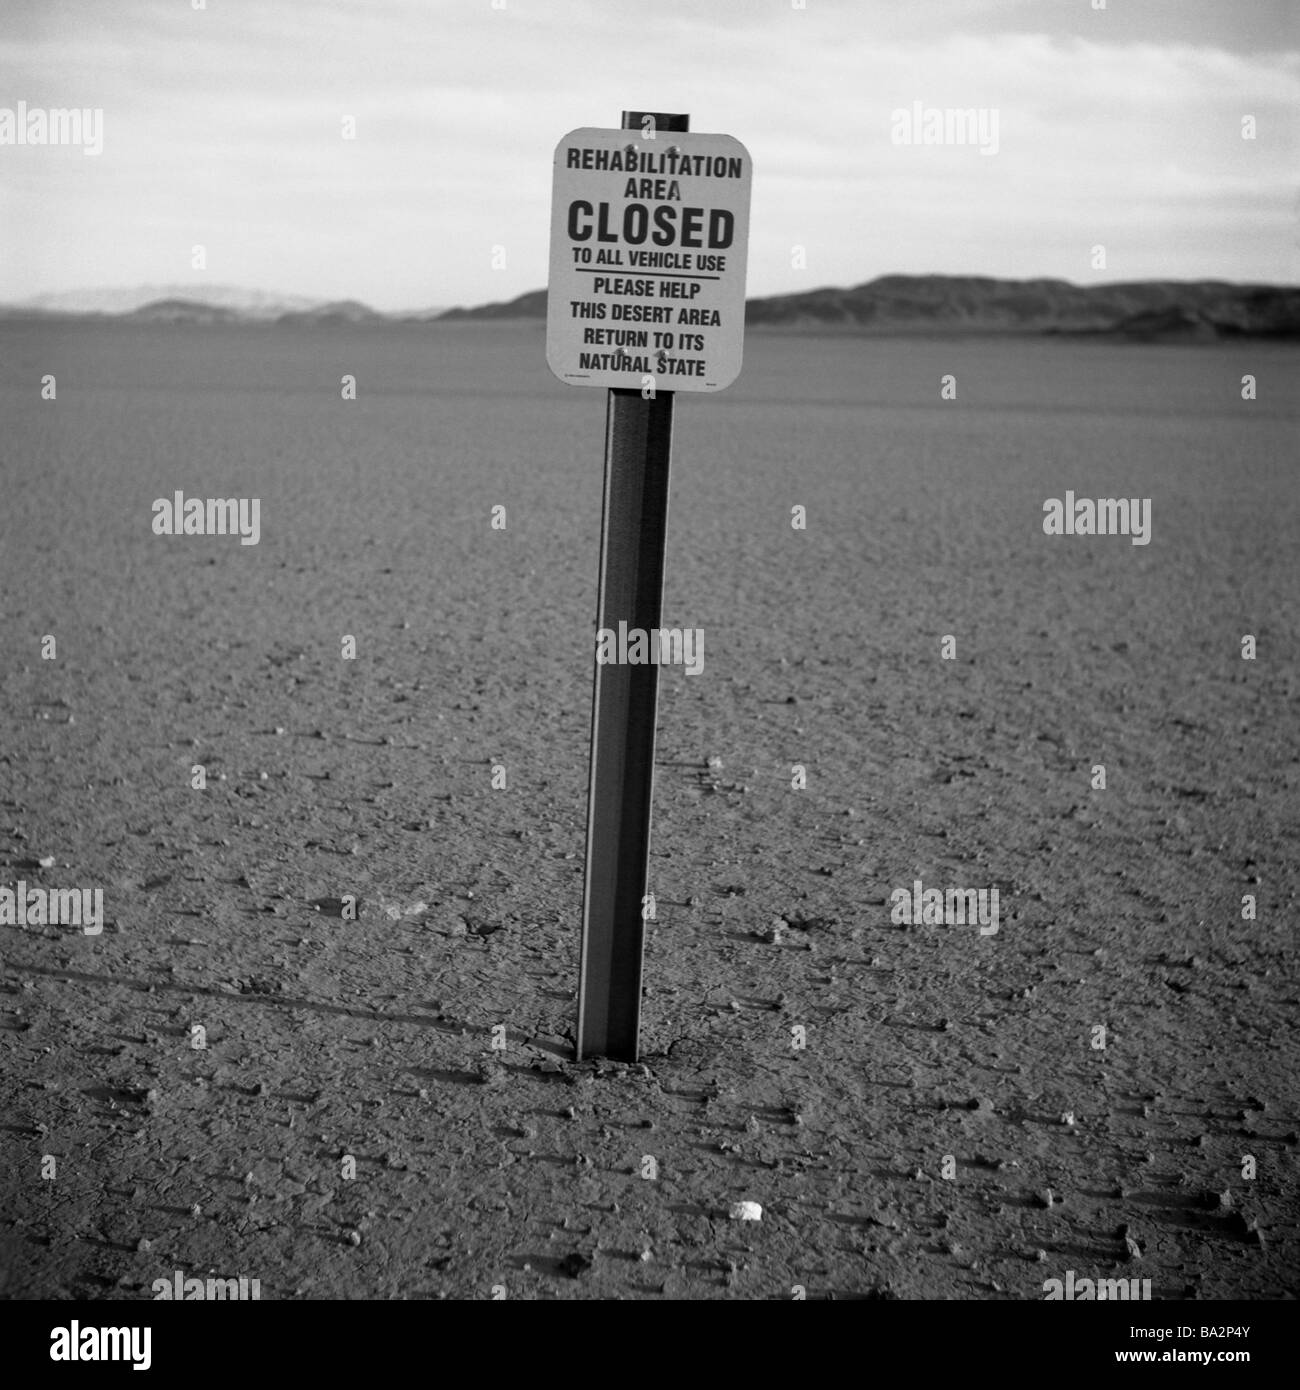 USA California Mojave Desert desert-landscape sign s/w North America Verinigte states of America Mojavewüste desert landscape Stock Photo